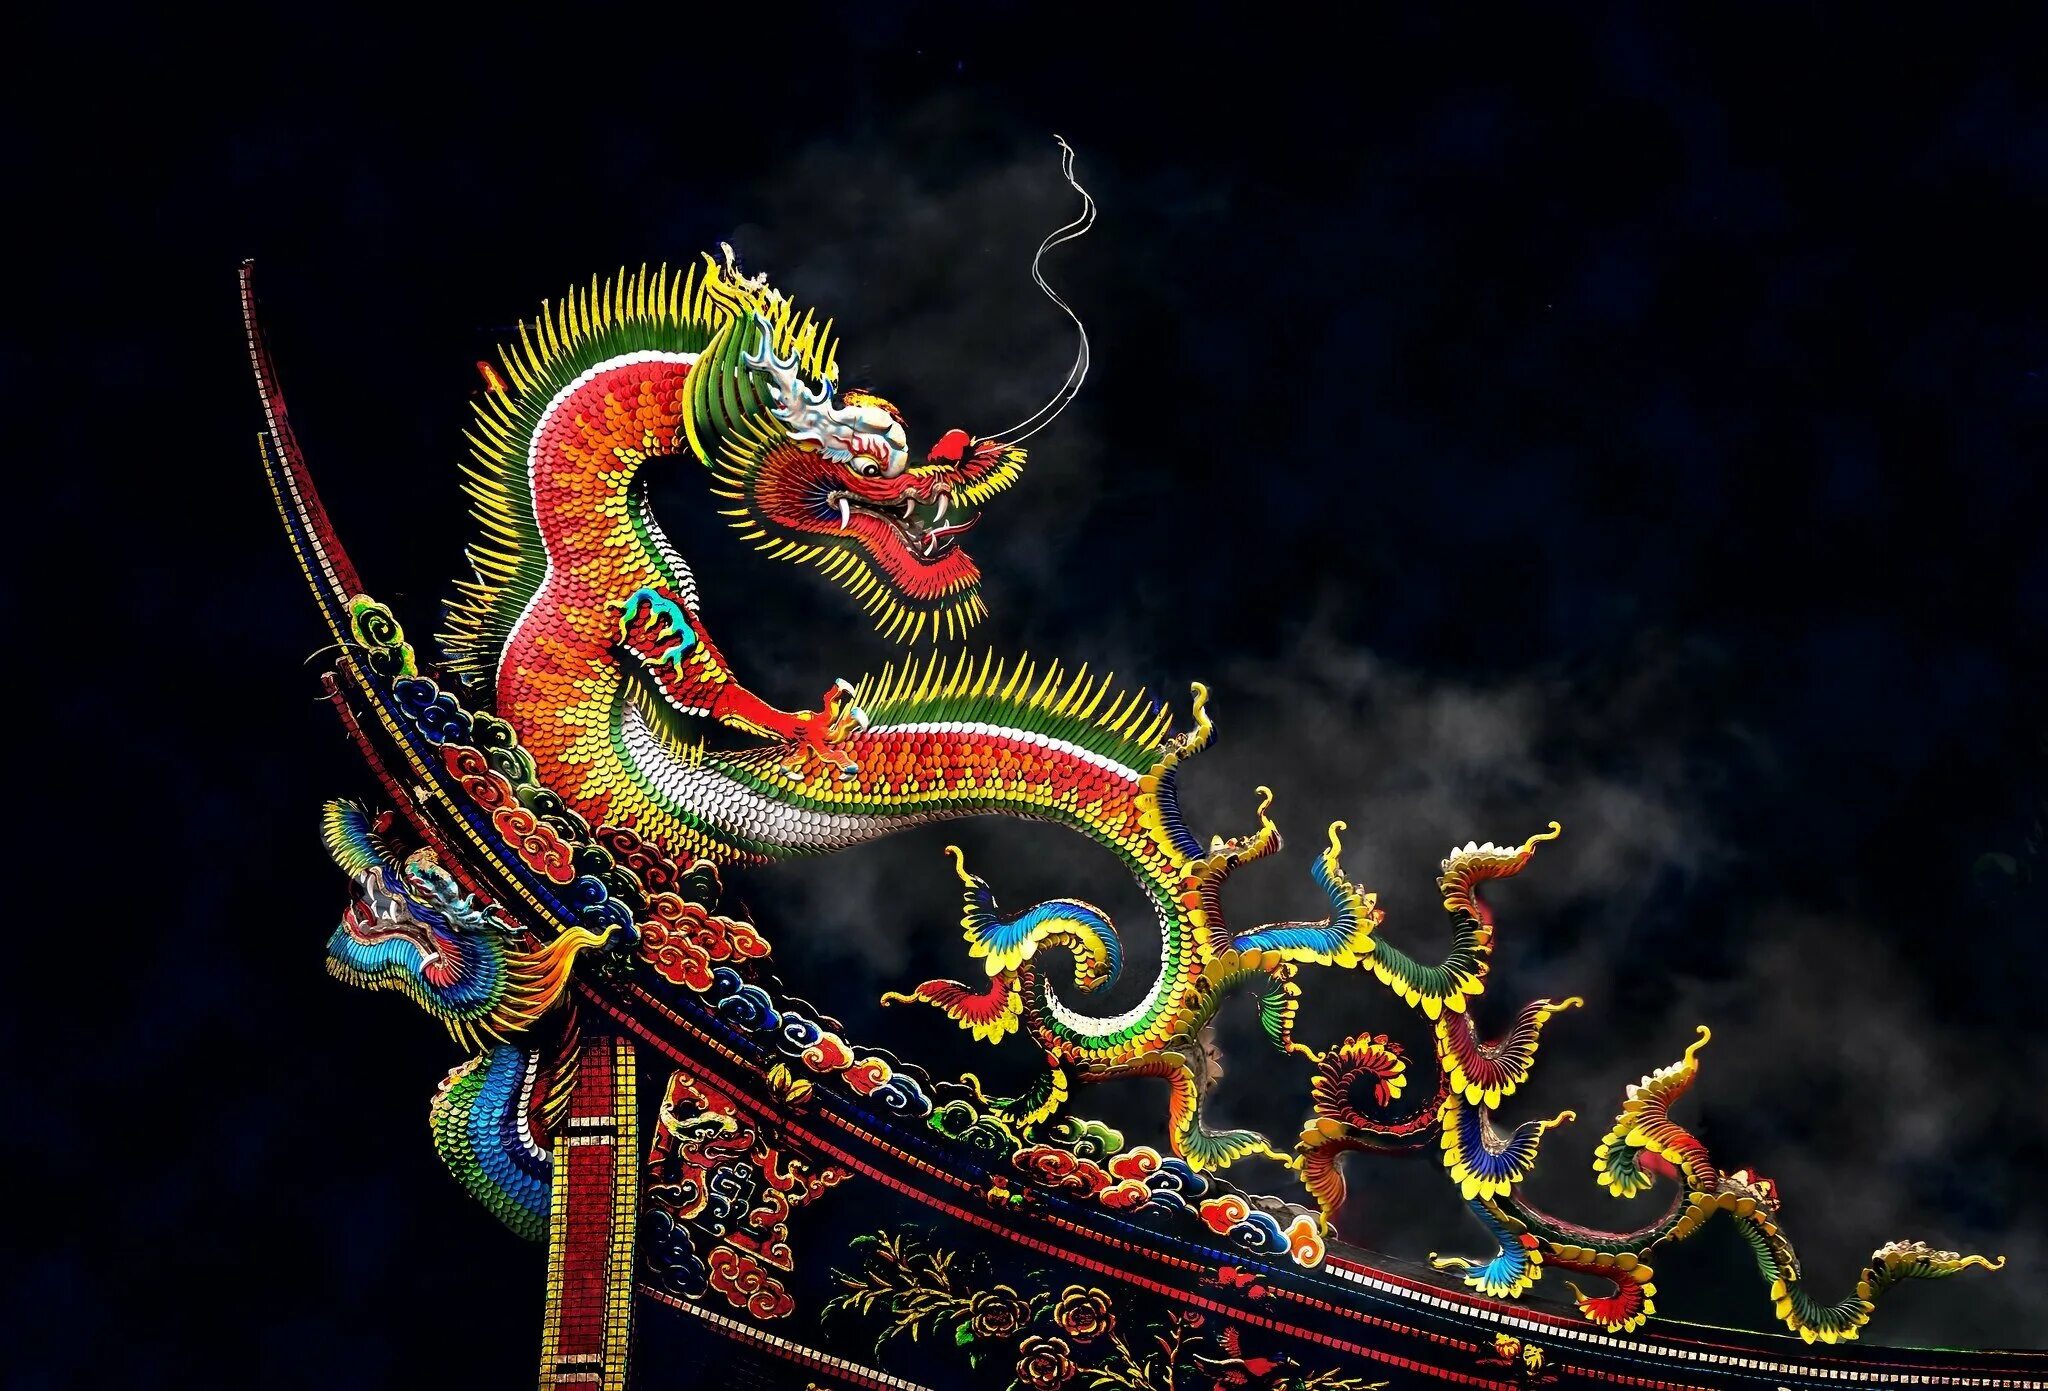 Тяньлун дракон. Китайский дракон Шеньлун. Китайский дракон чиа. Фуцанлун дракон. Русский дракон китайский дракон